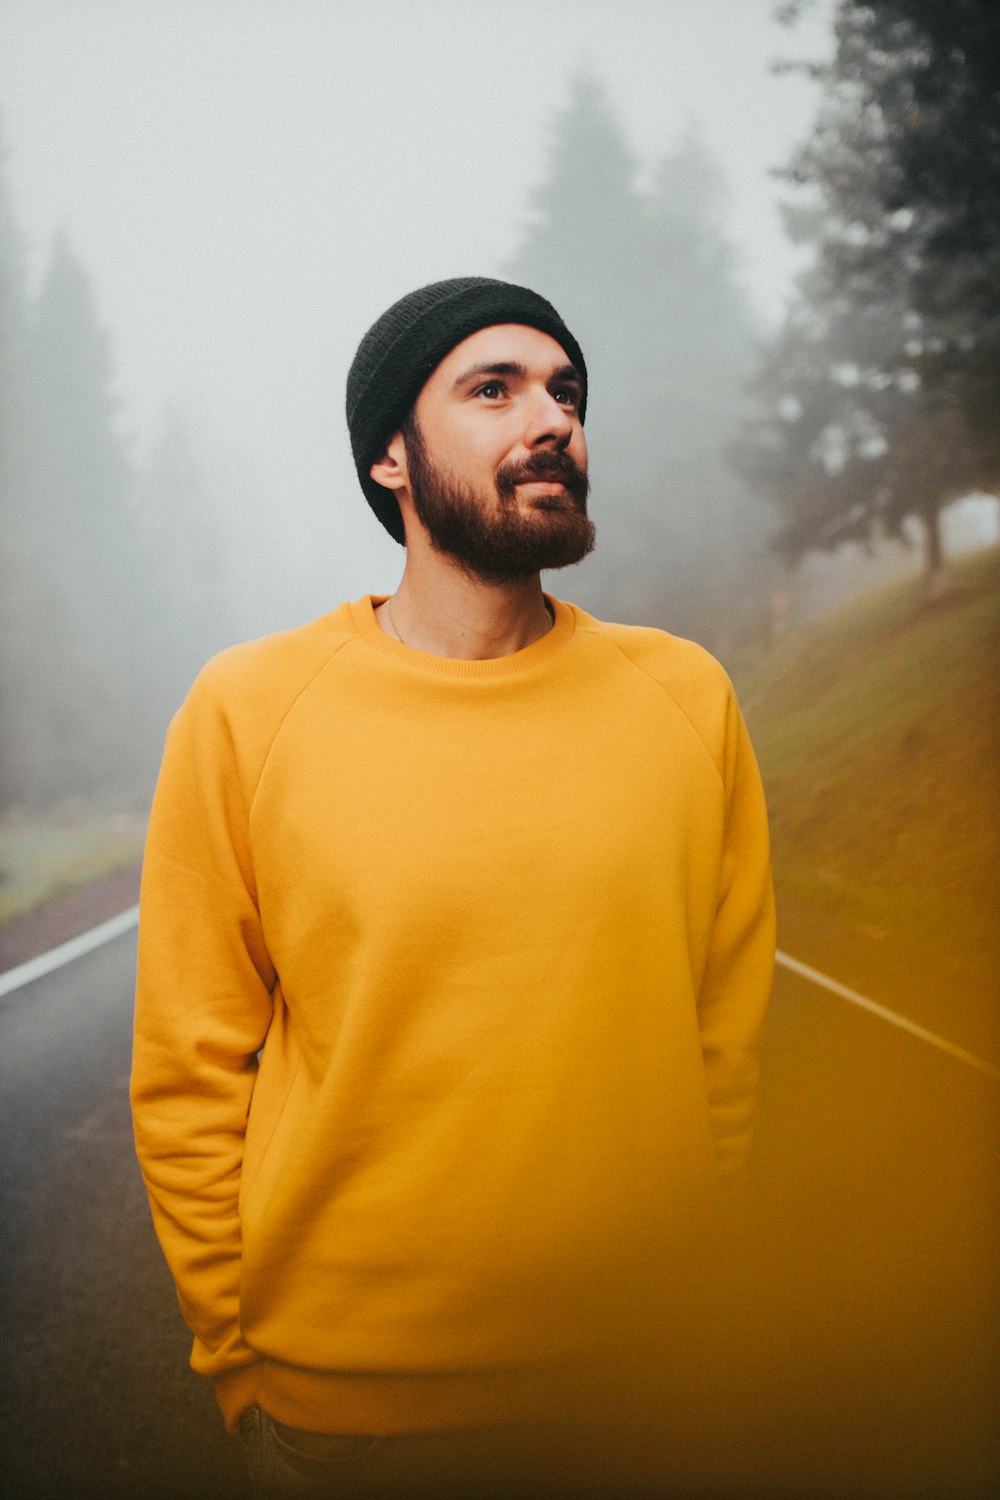 man in yellow turtleneck sweater standing near green grass field